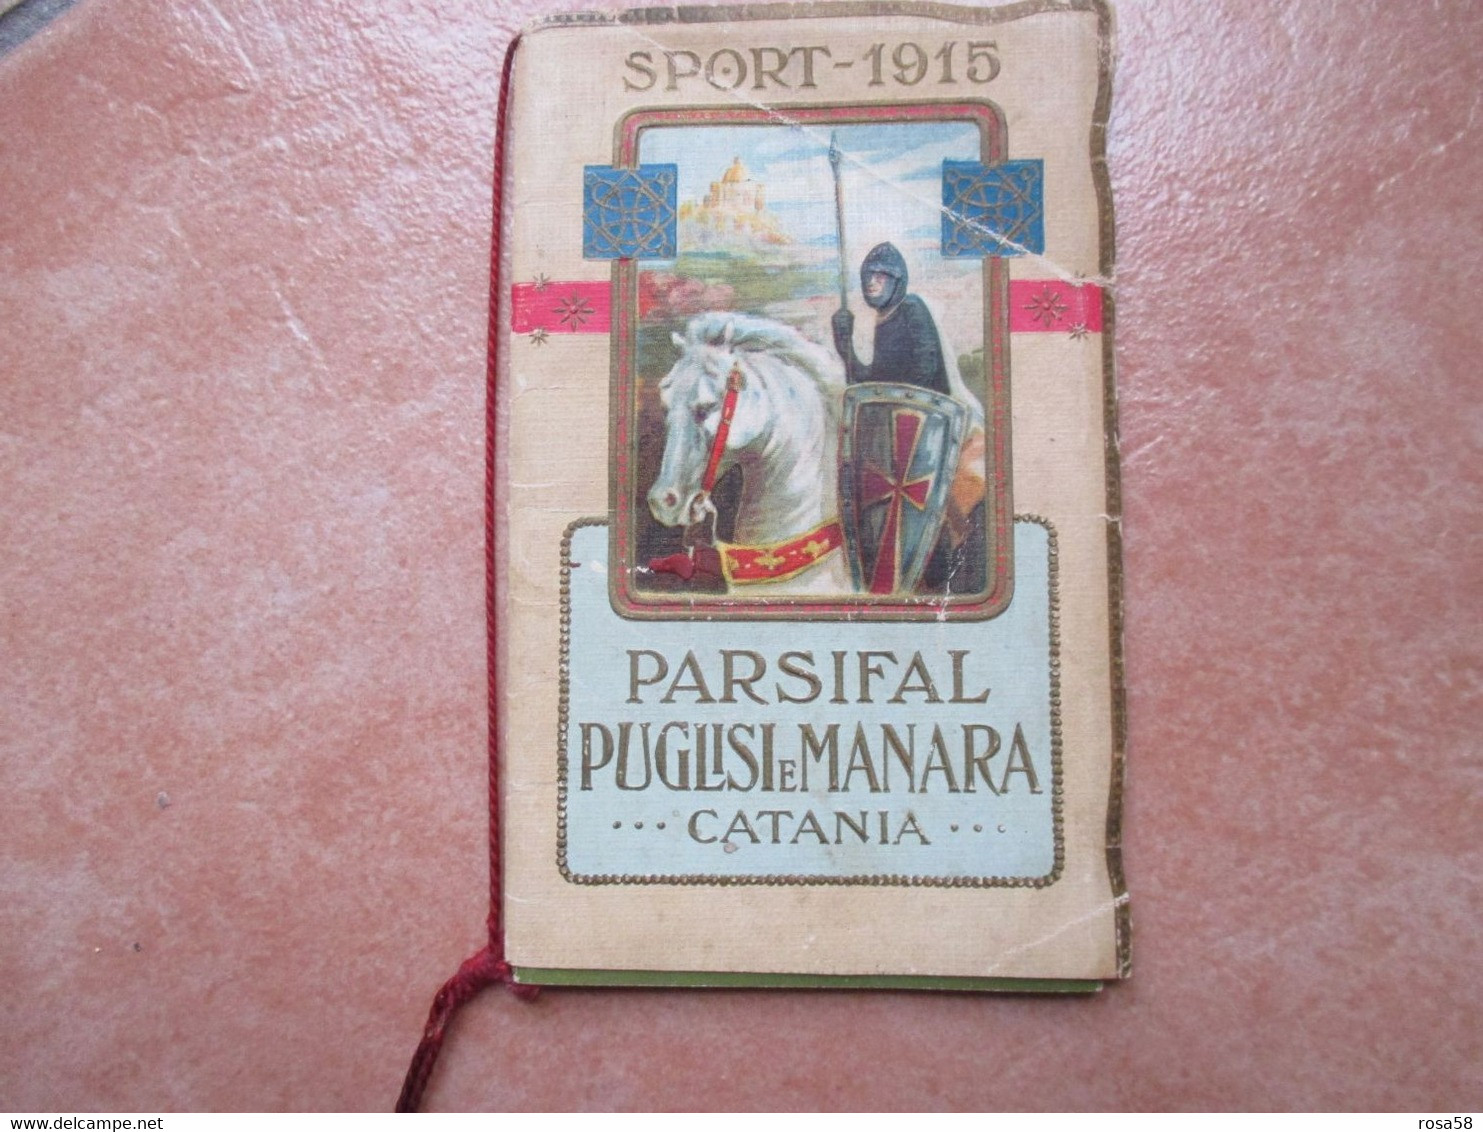 SPORT 1915 PARSIFAL Puglisi E Manara CATANIA Profumerie Igieniche - Grossformat : 1901-20